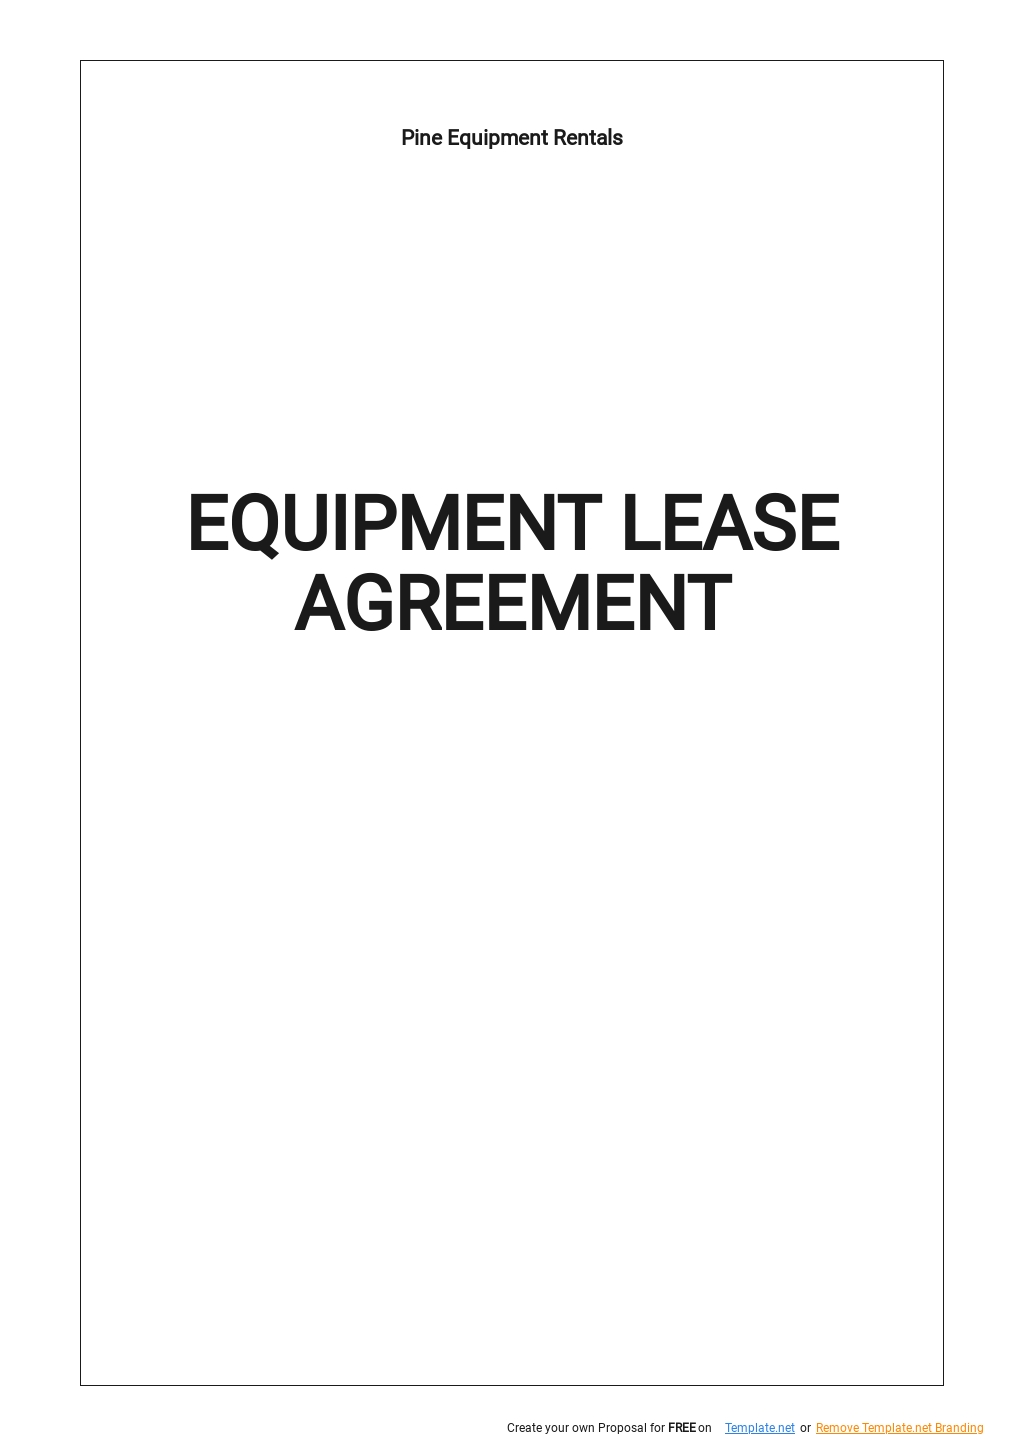 9-commercial-rental-agreement-template-sampletemplatess-printable-rental-agreement-21-free